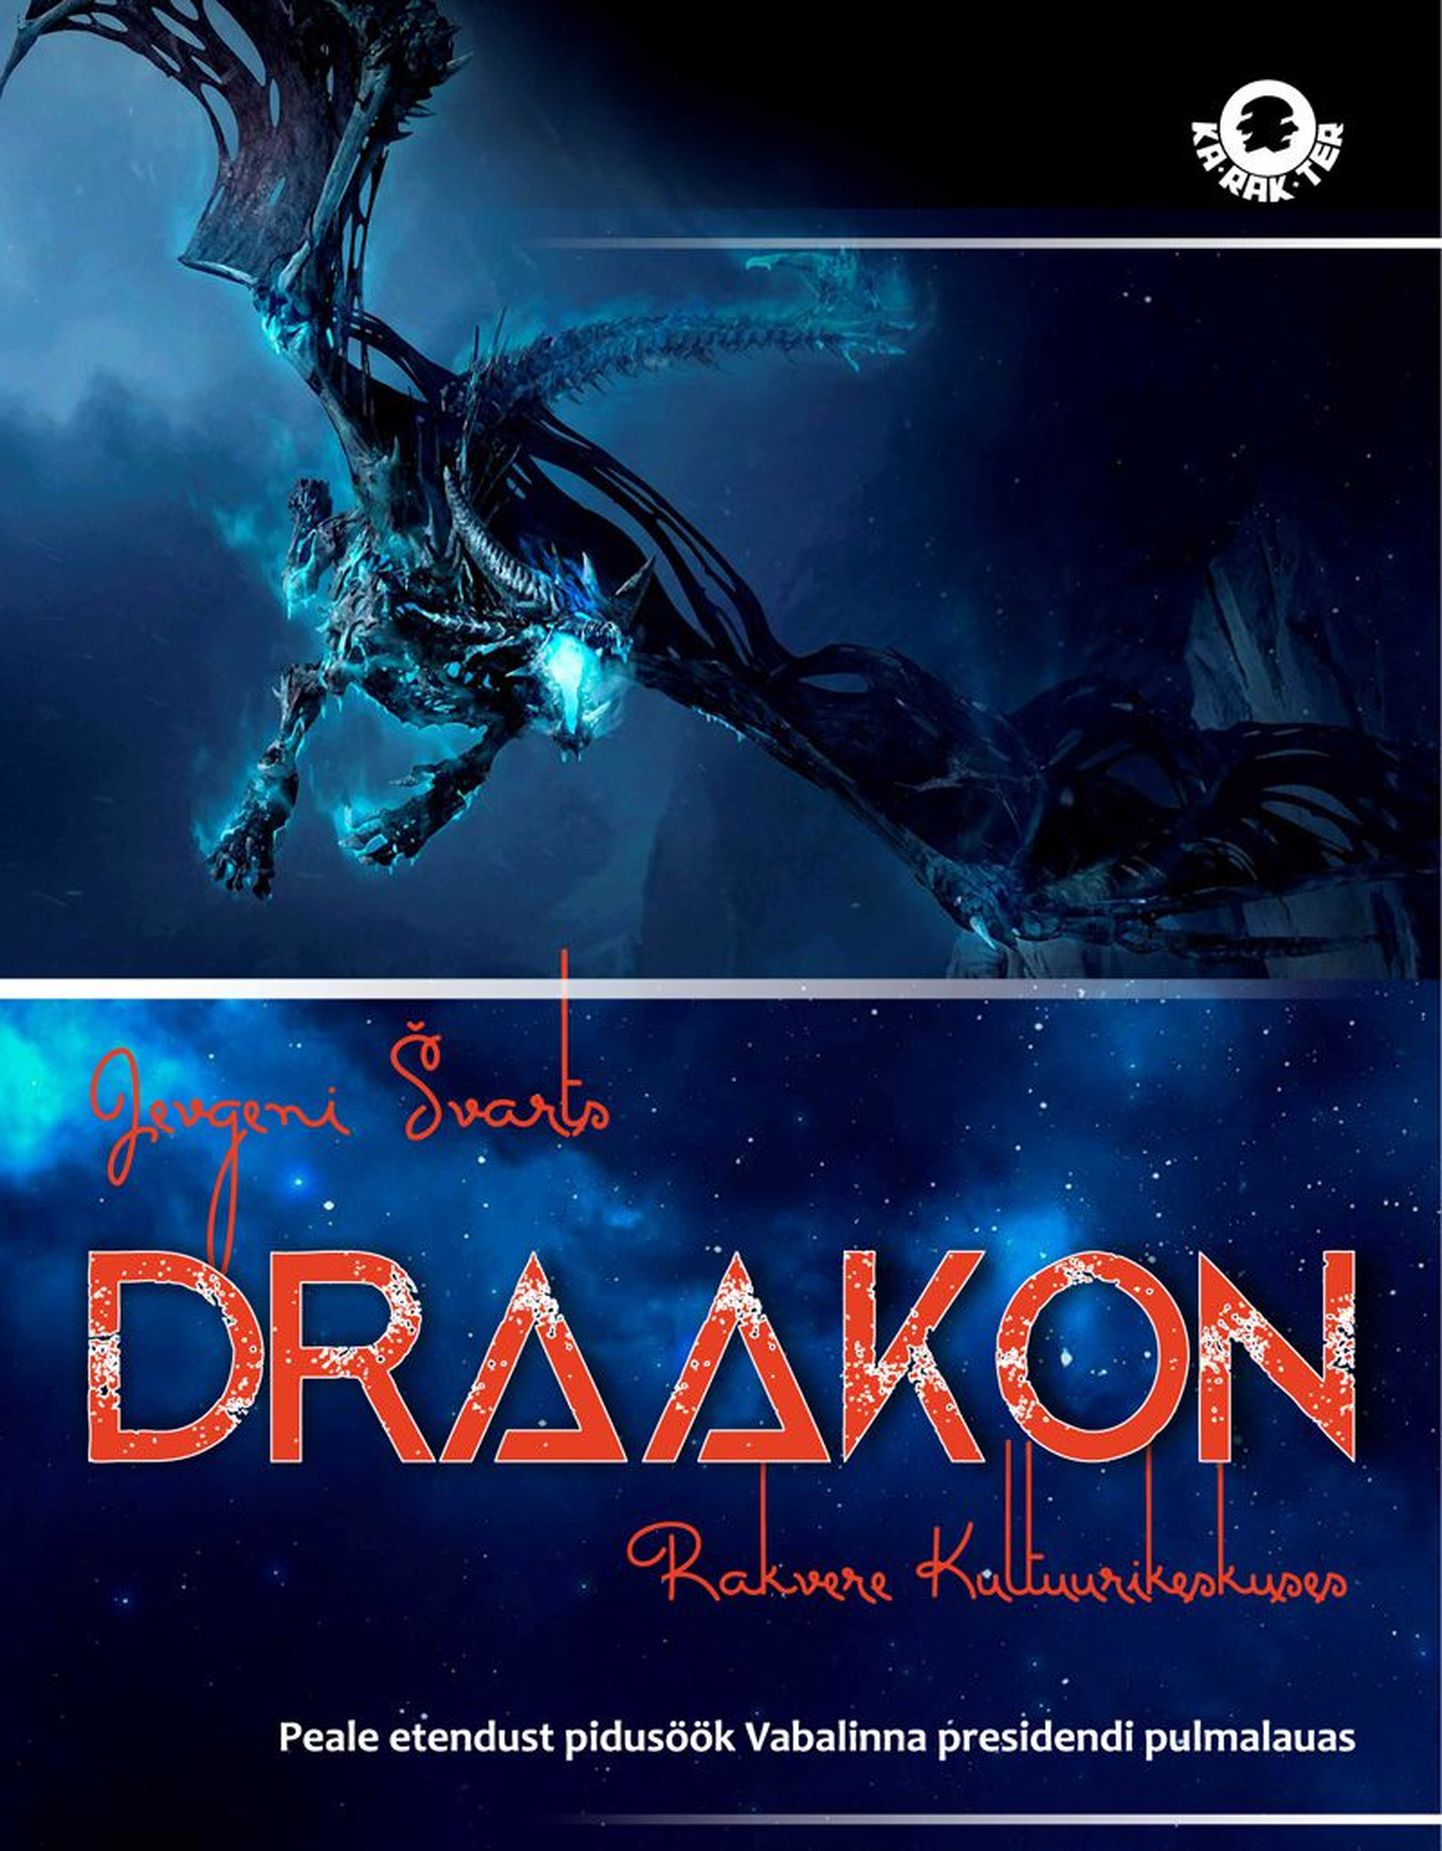 “Draakon”.